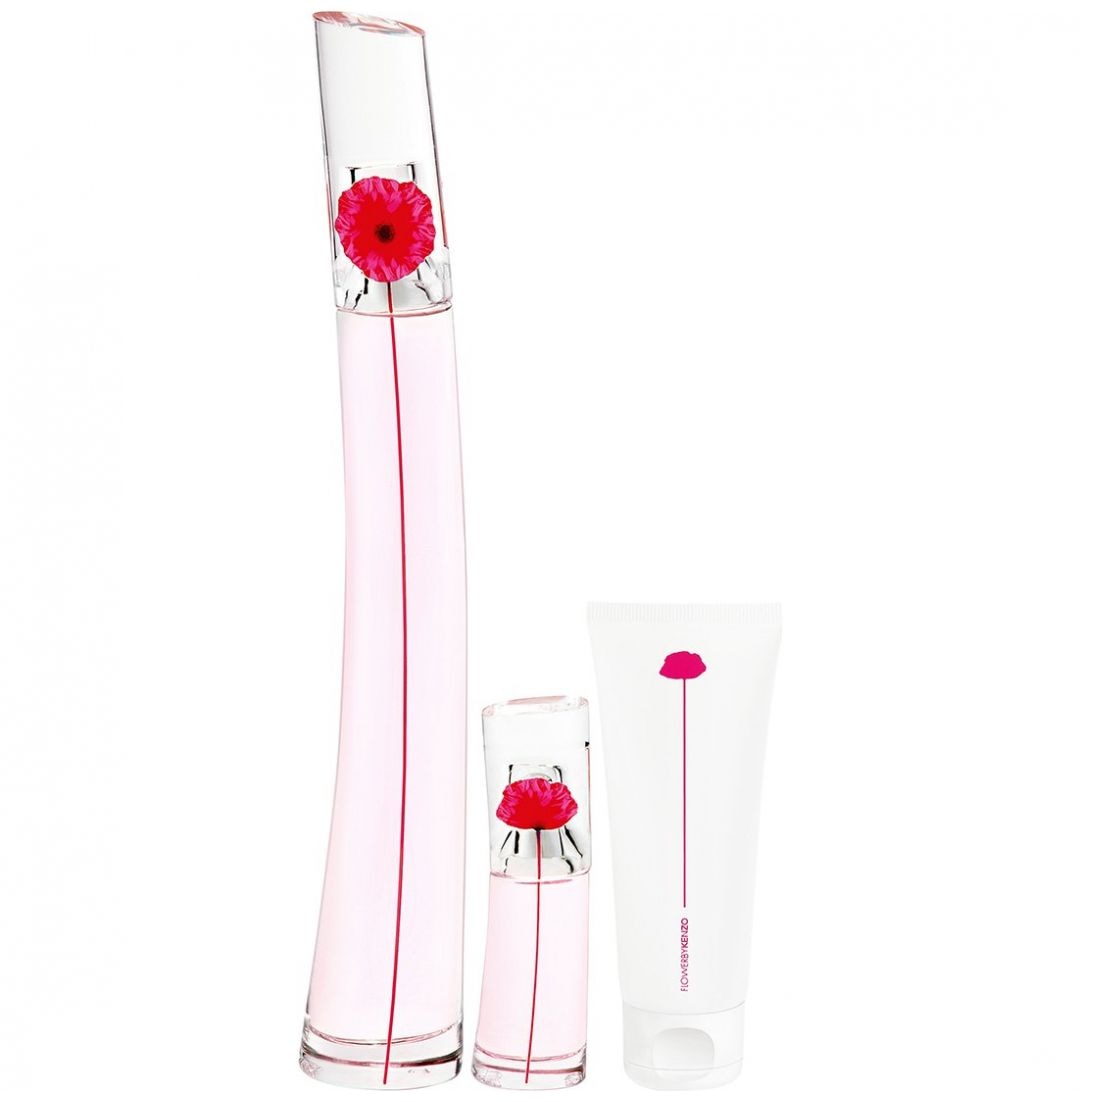 Estuche para Dama Flower By Kenzo Poppy Bouquet Edp 100 Ml, + Perfumero 15 Ml + Crema Corporal 75 Ml